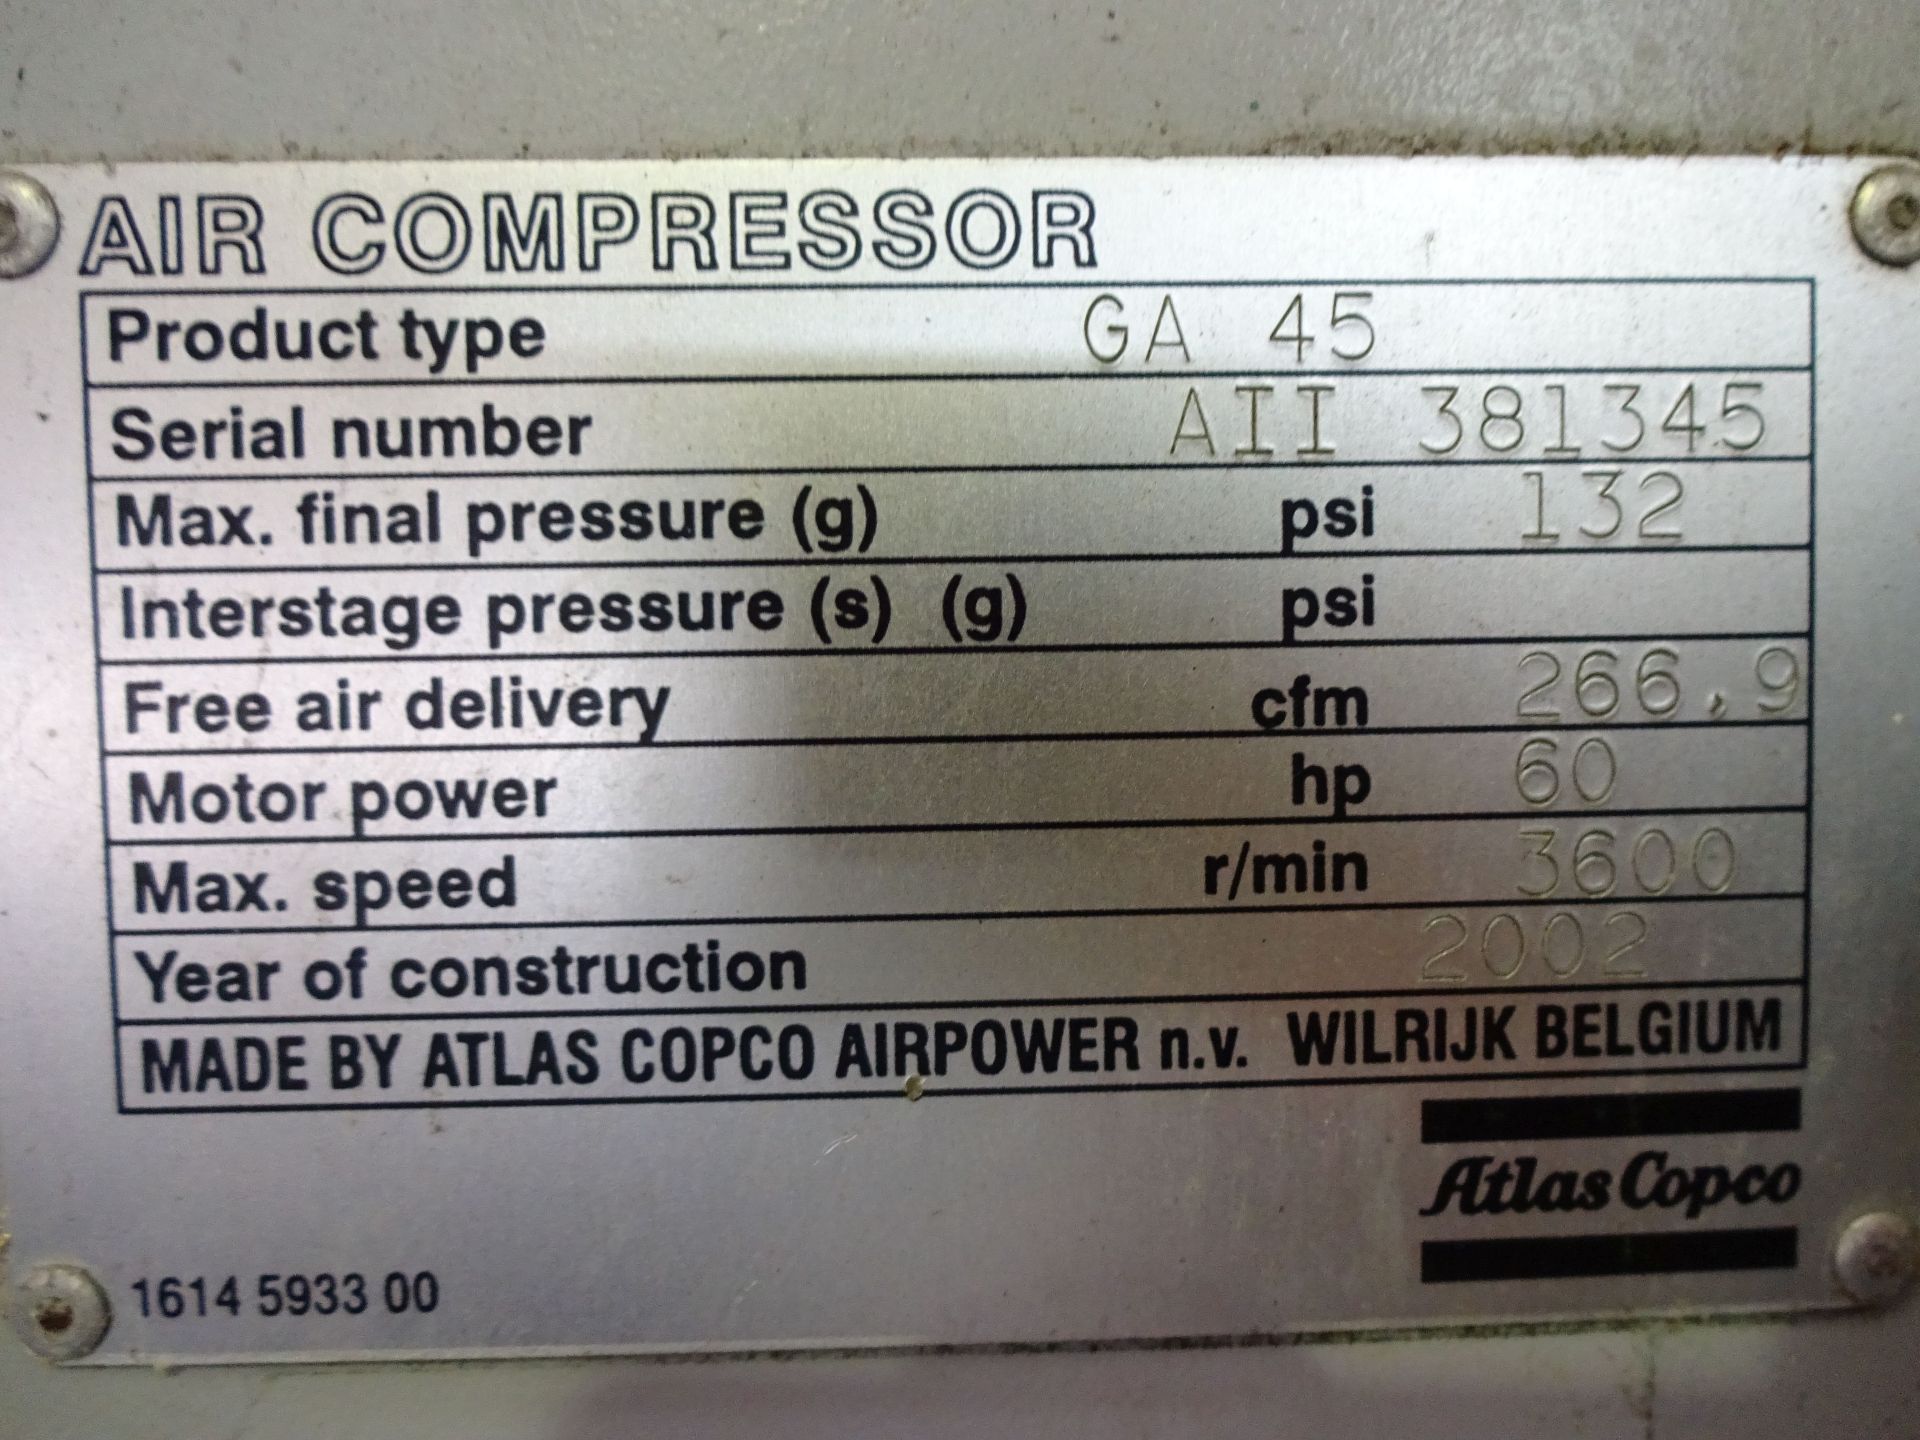 60 HP ATLAS COPCO MODEL GA45FF ENCLOSED AIR COMPRESSOR; S/N A11381345 (NEW 2002) -------- INDUSTRIAL - Image 3 of 3